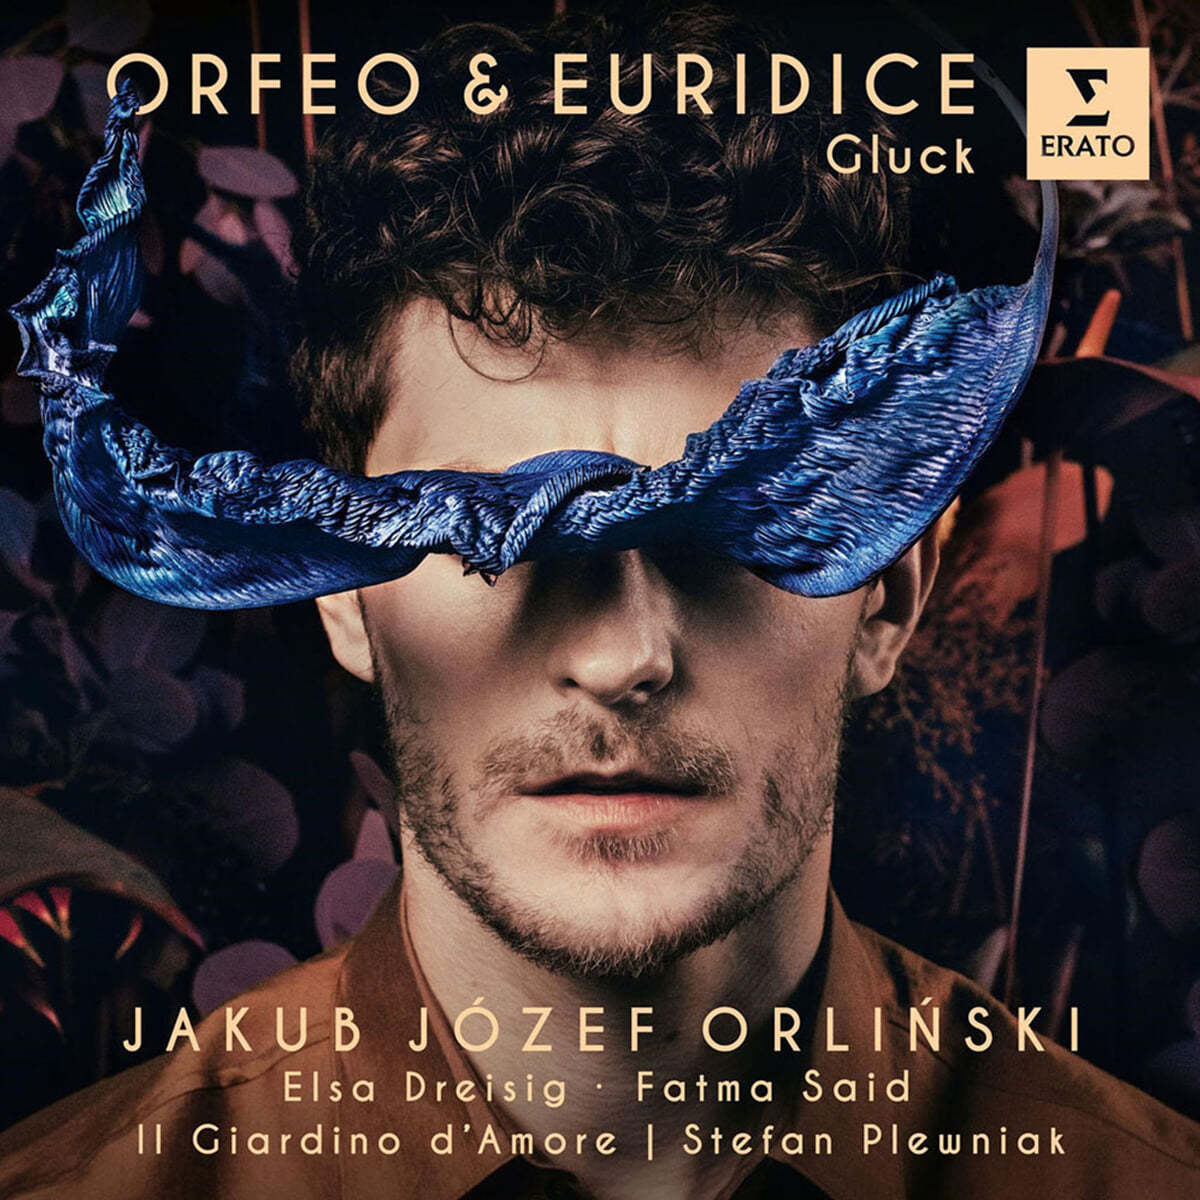 Jakub Jozef Orlinski 글룩: 오페라 '오르페오와 에우리디체' (Gluck: Orfeo & Euridice)